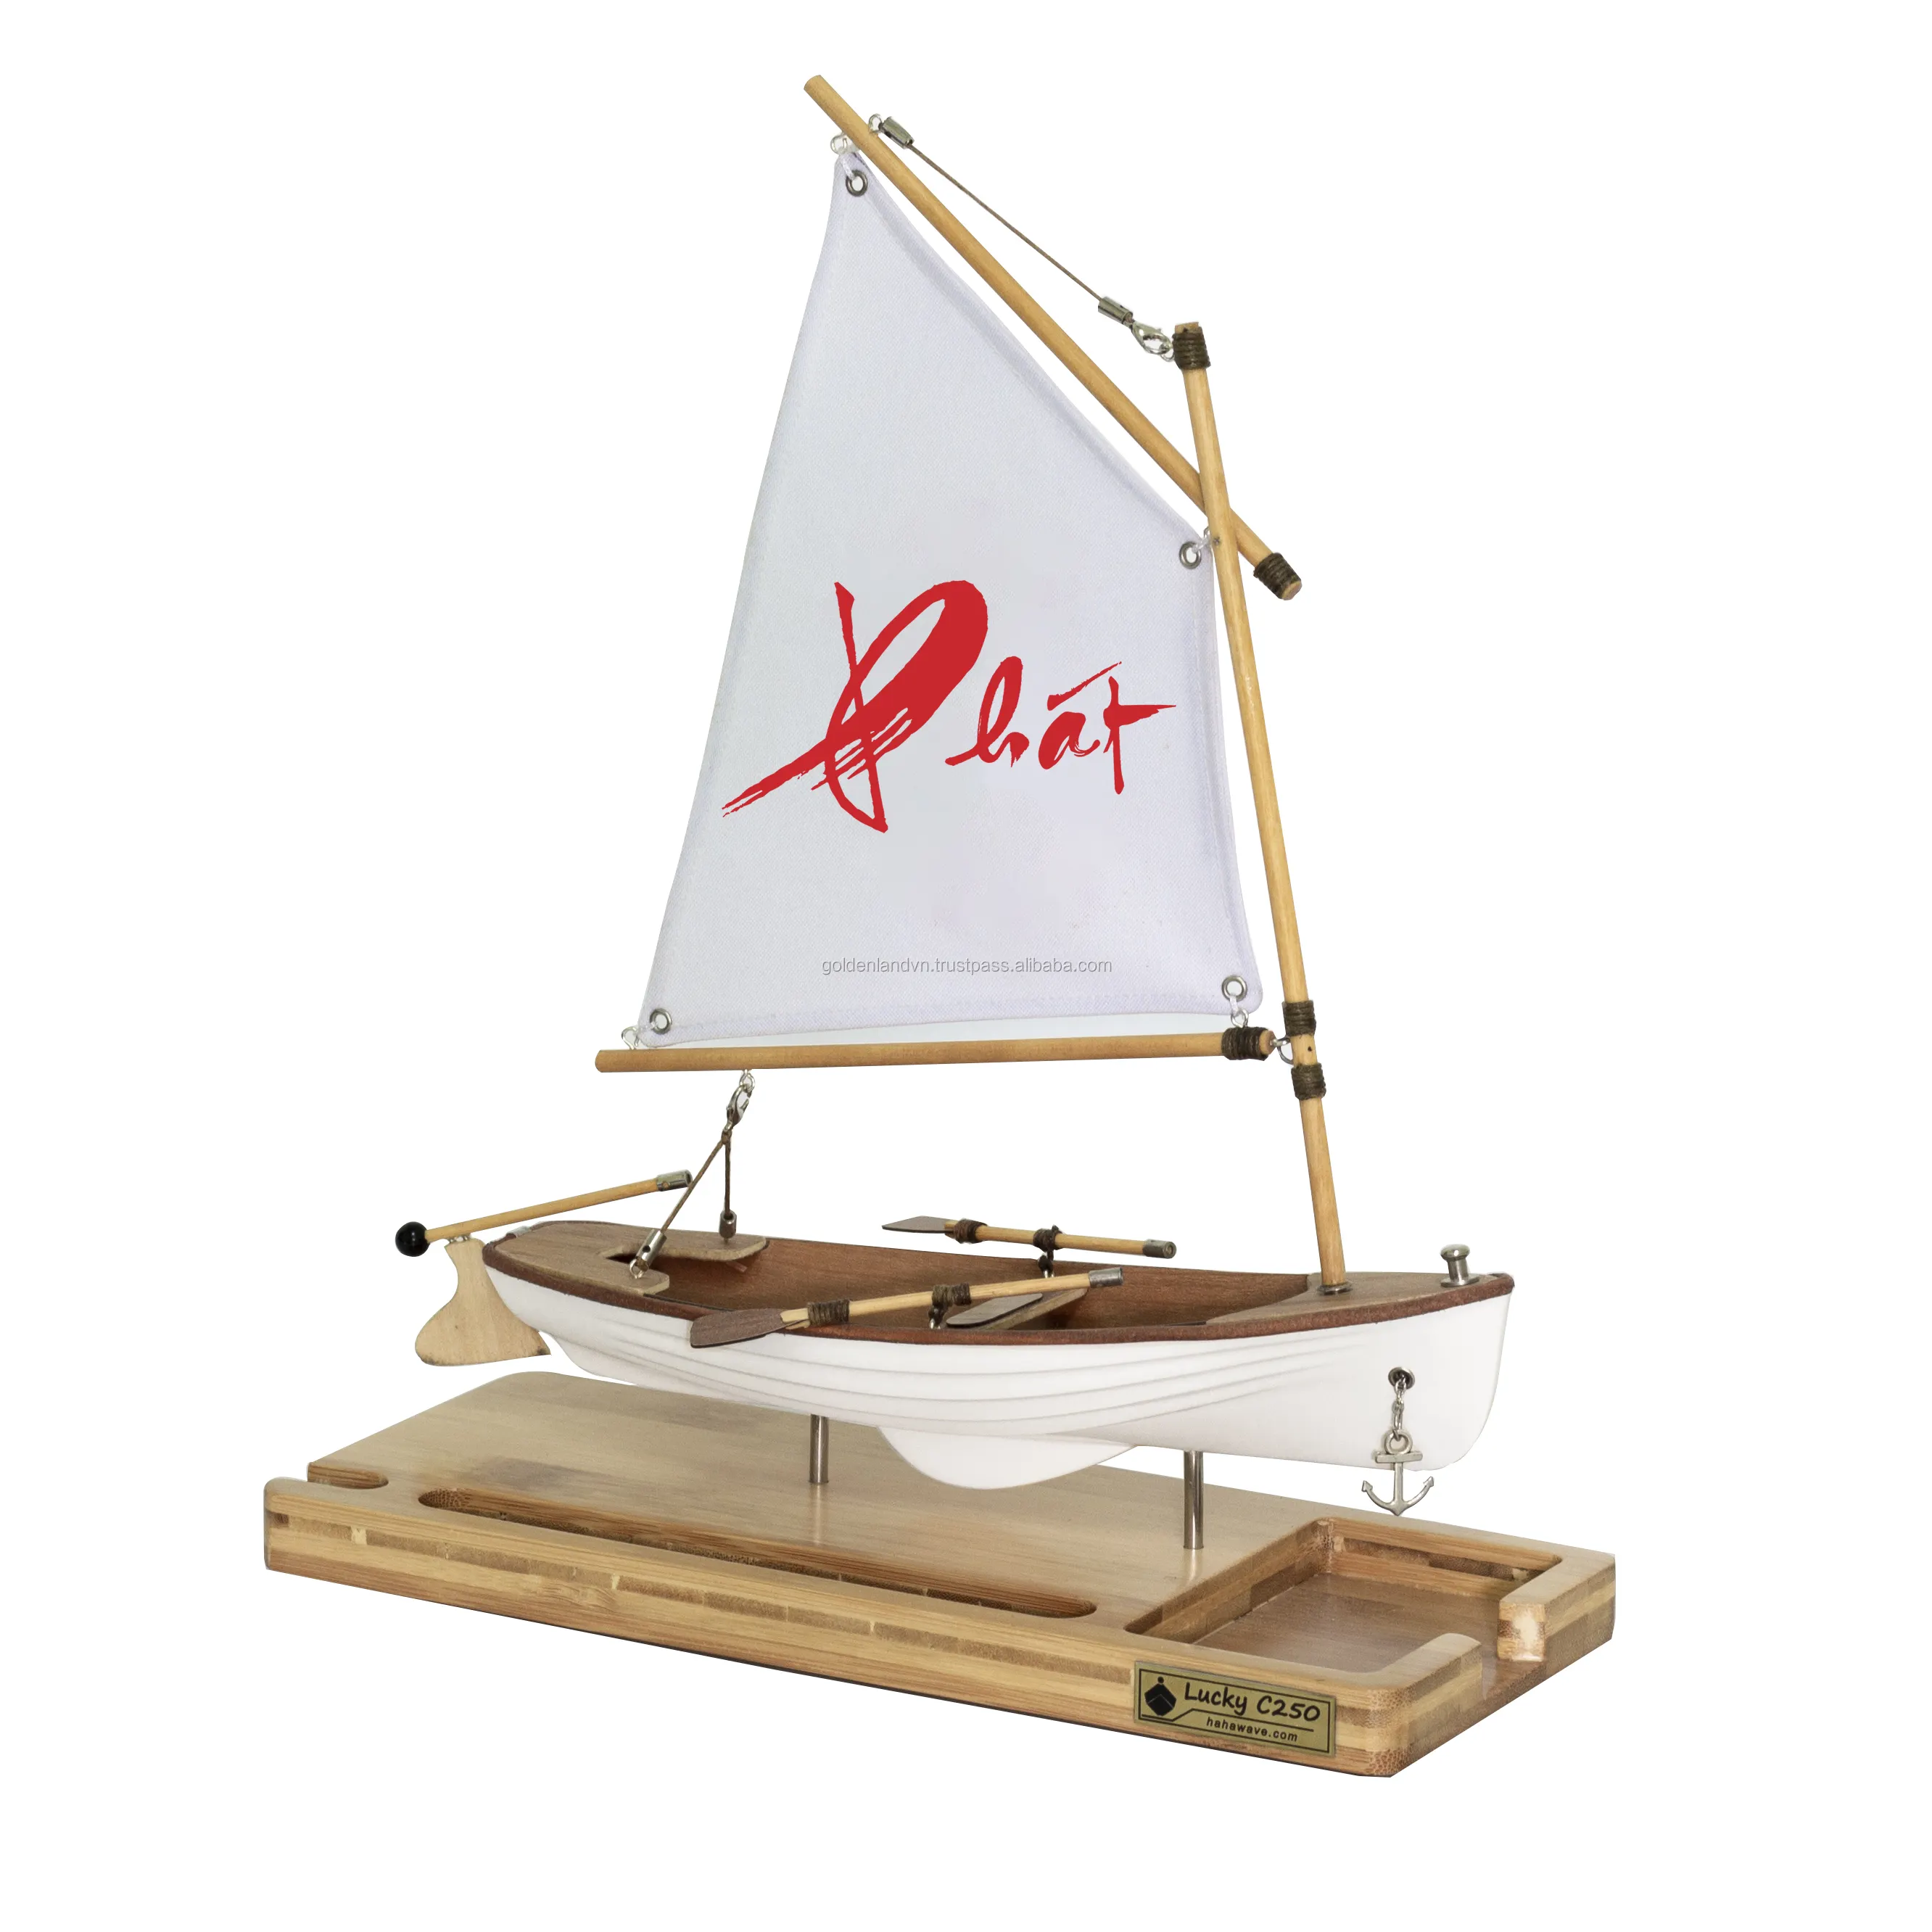 Composite bamboo model boat handcraft 100%